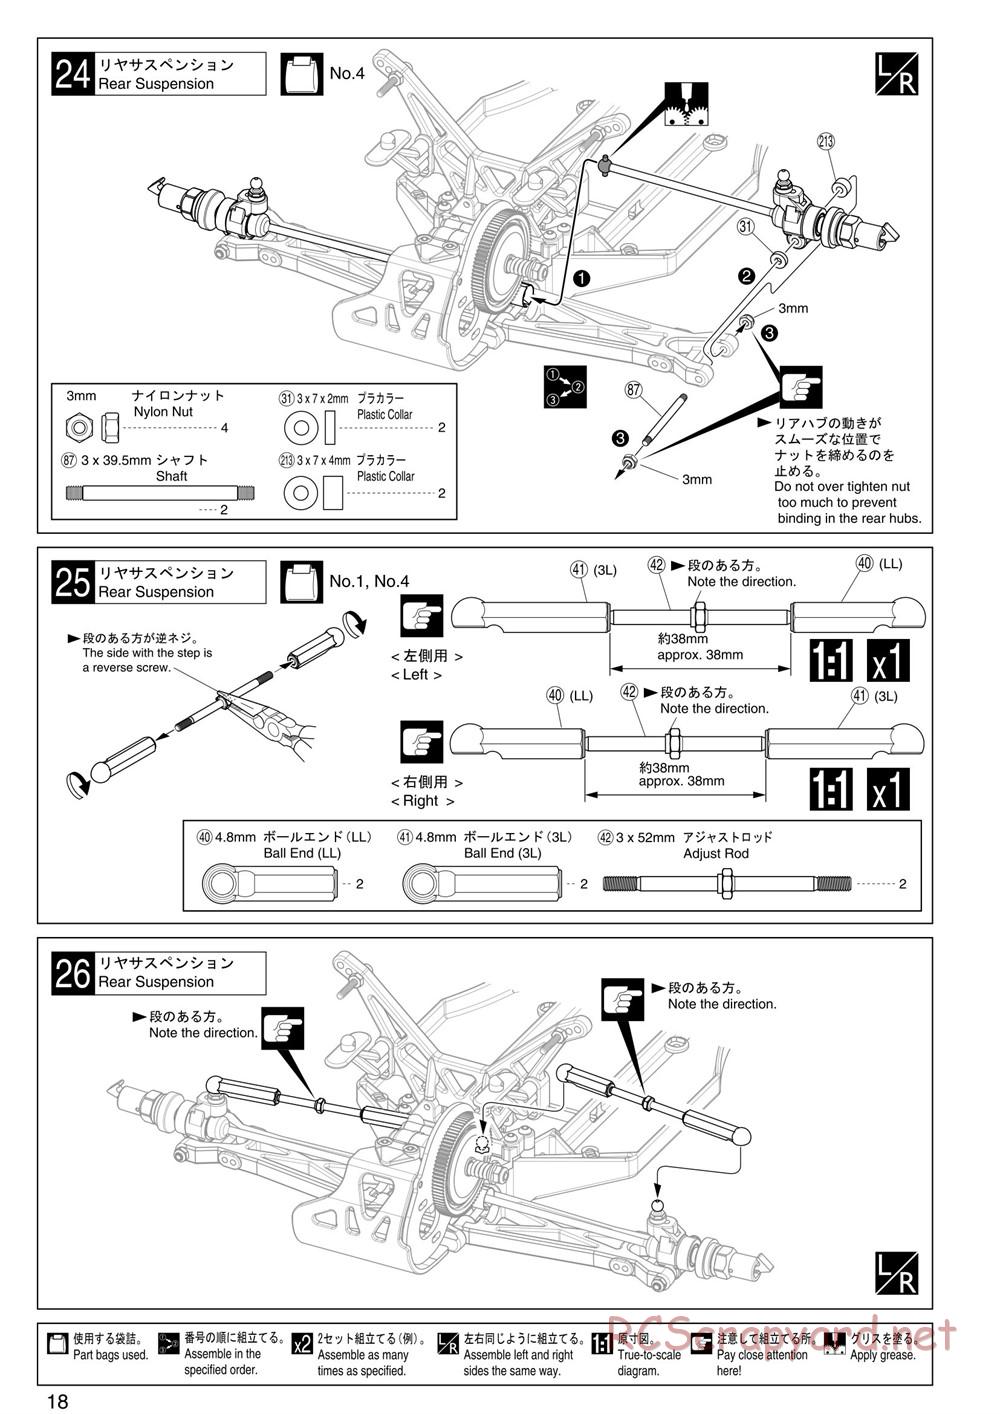 Kyosho - Ultima RT5 - Manual - Page 18